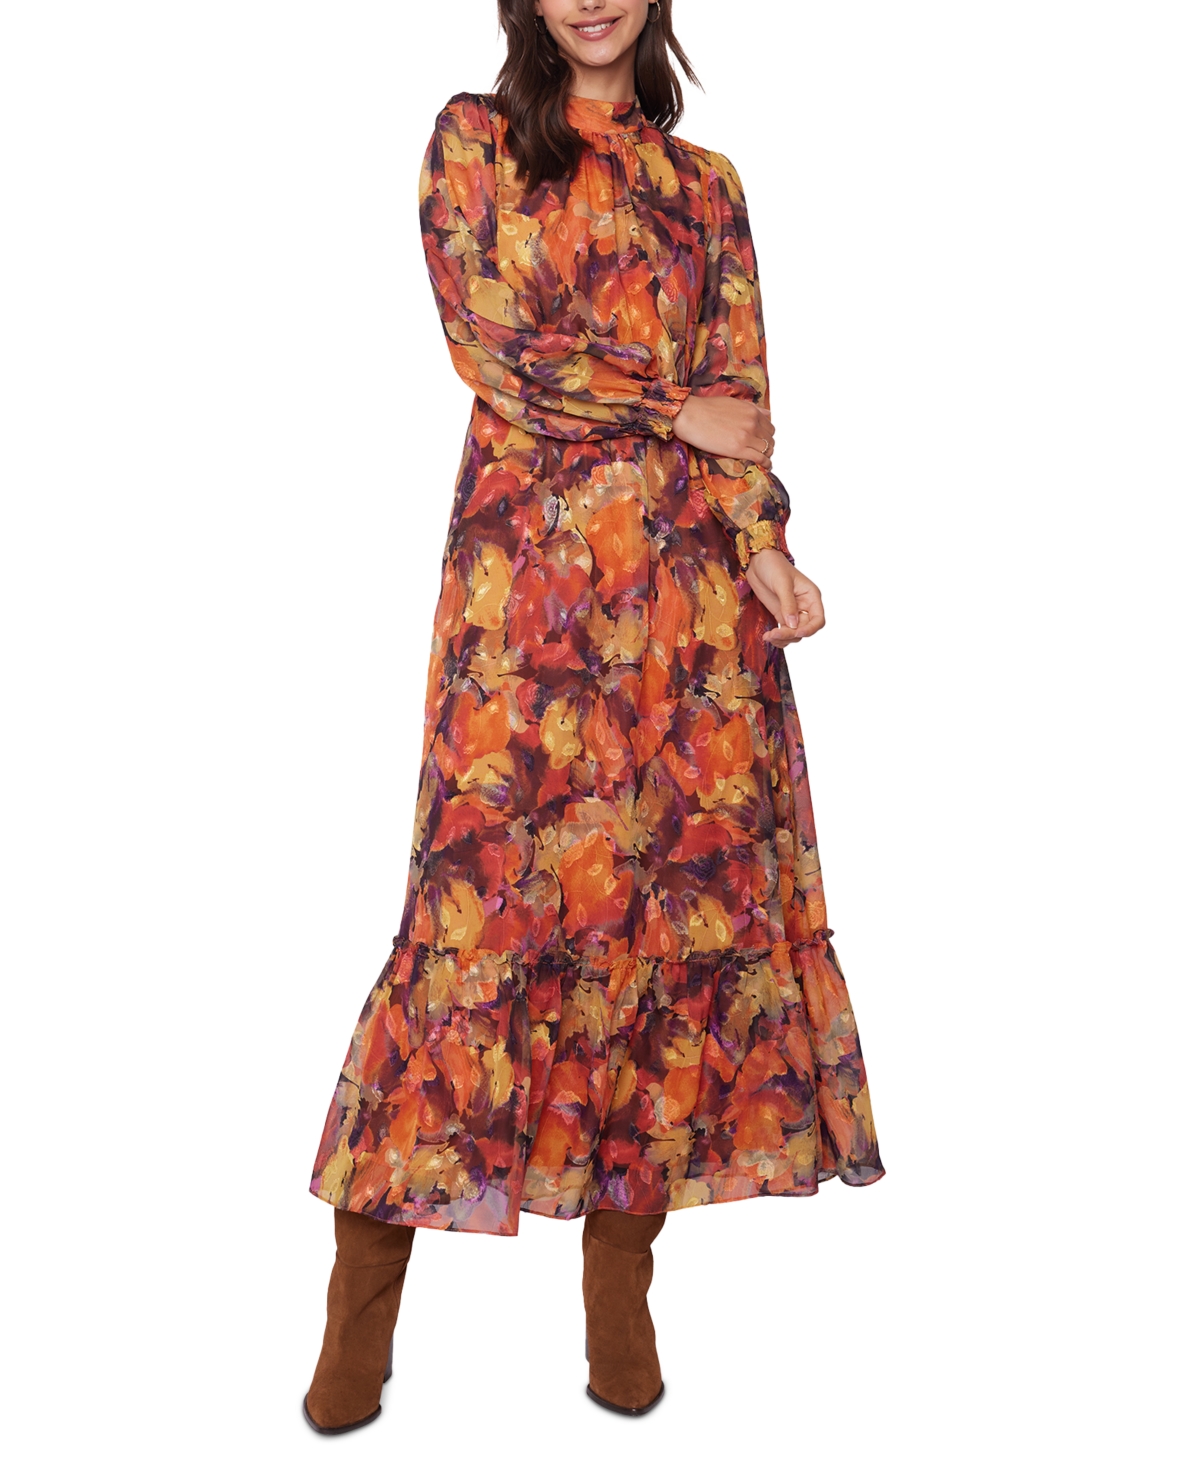 Women's Surreal Floral-Print Maxi Dress - Orange Multi